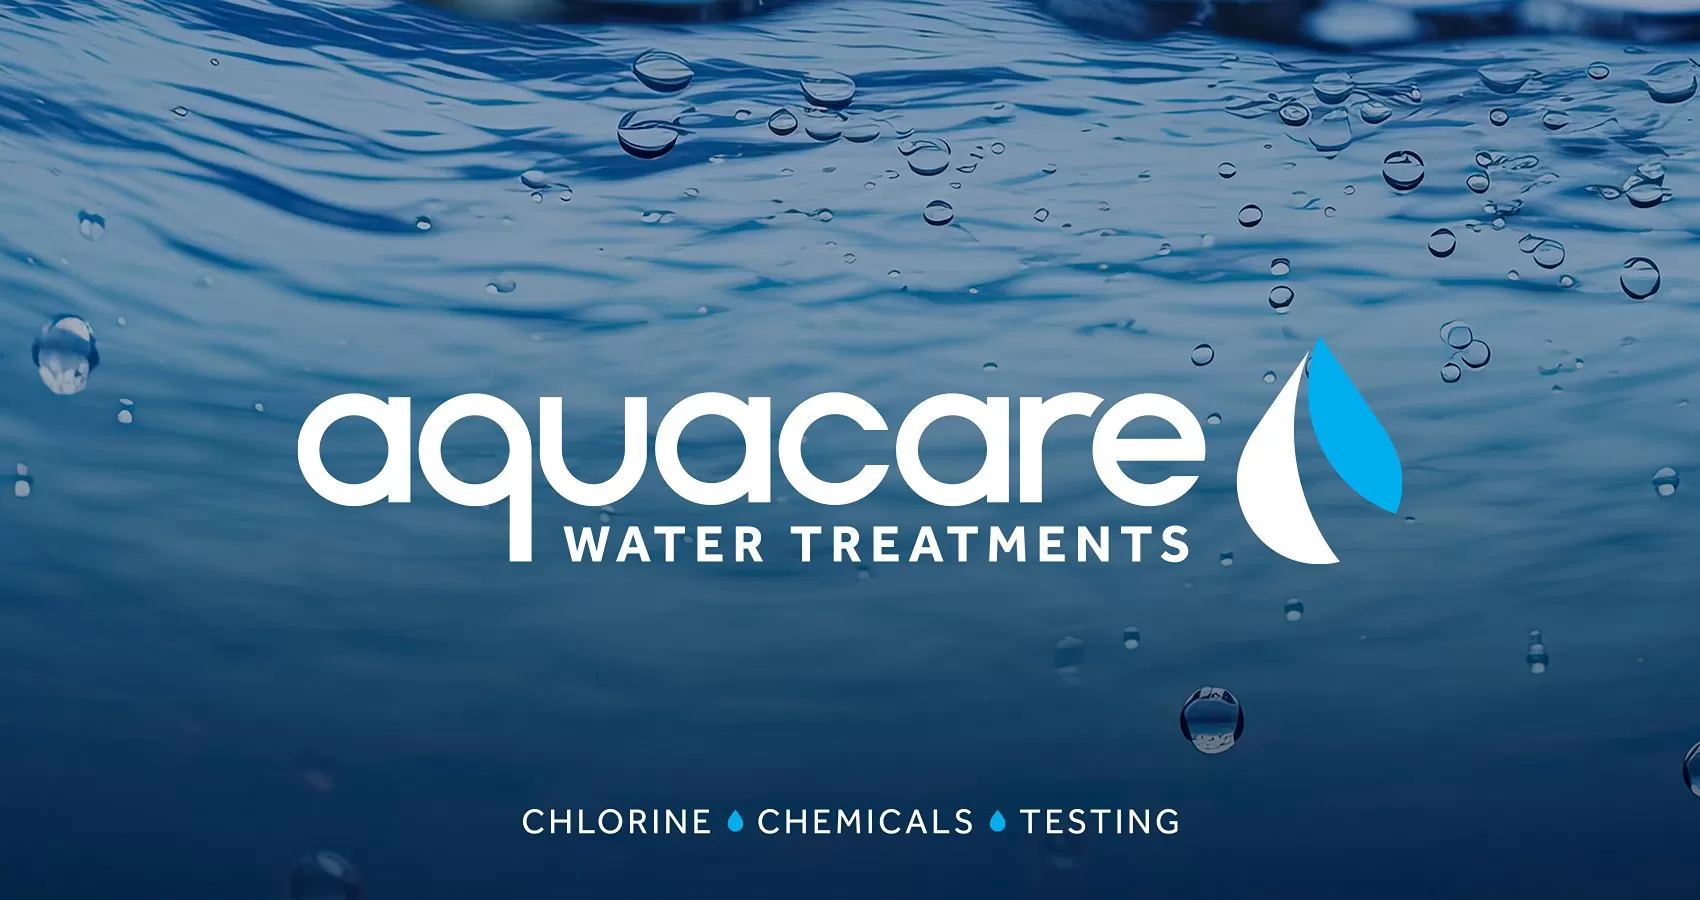 aquacare water treatments activate design case study